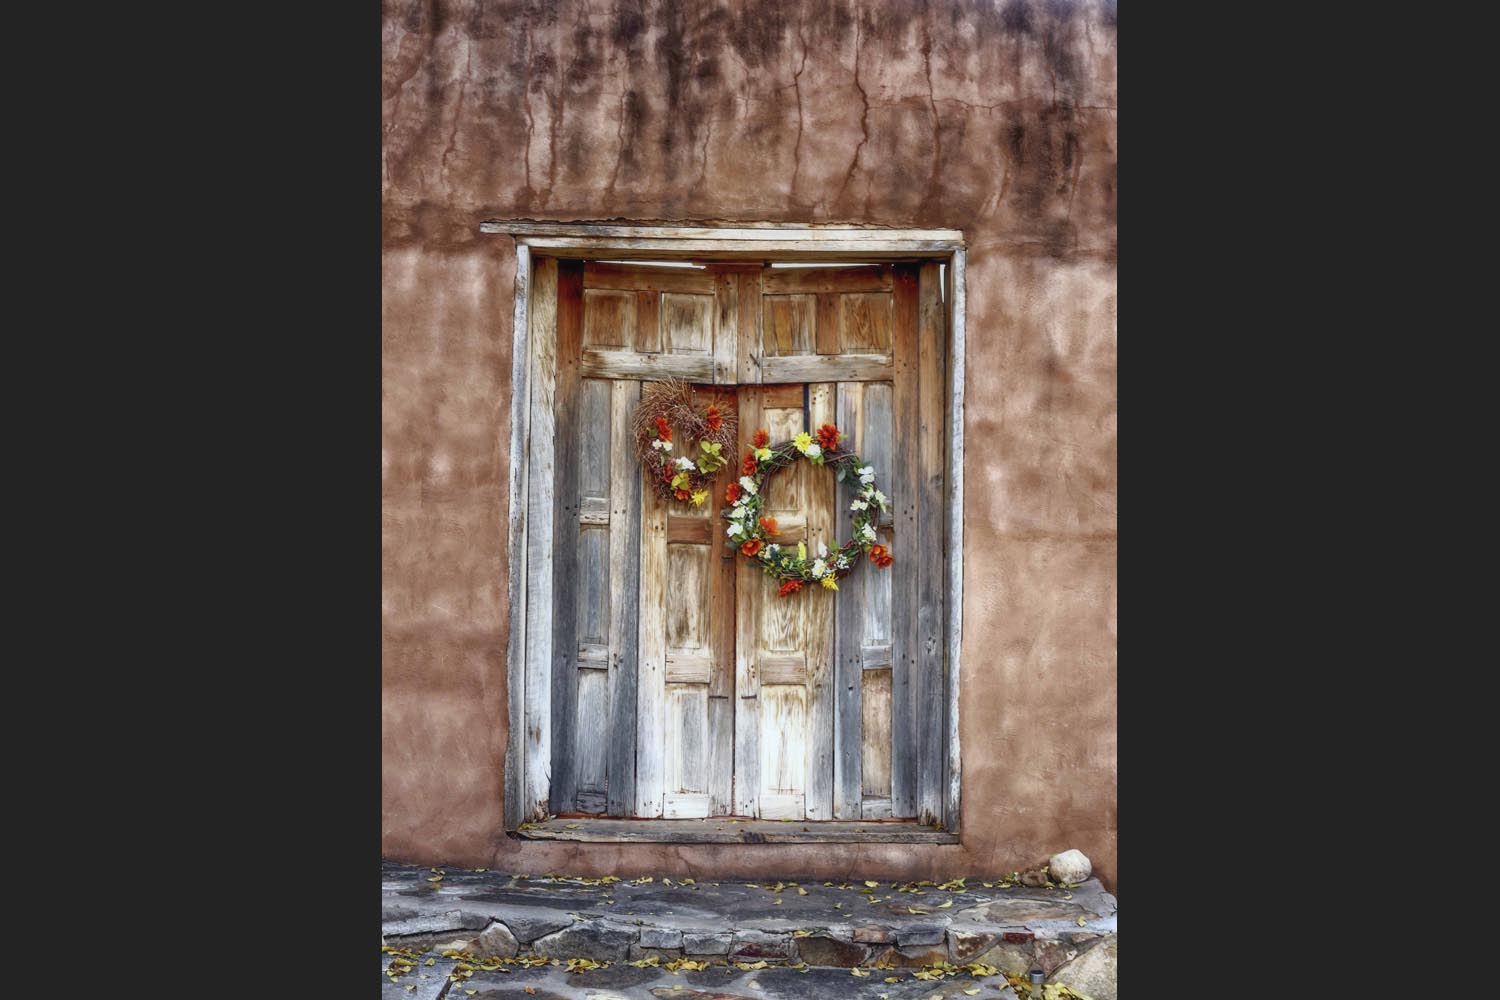 April Pilley: The Doors at San Patricio - Southern New Mexico 